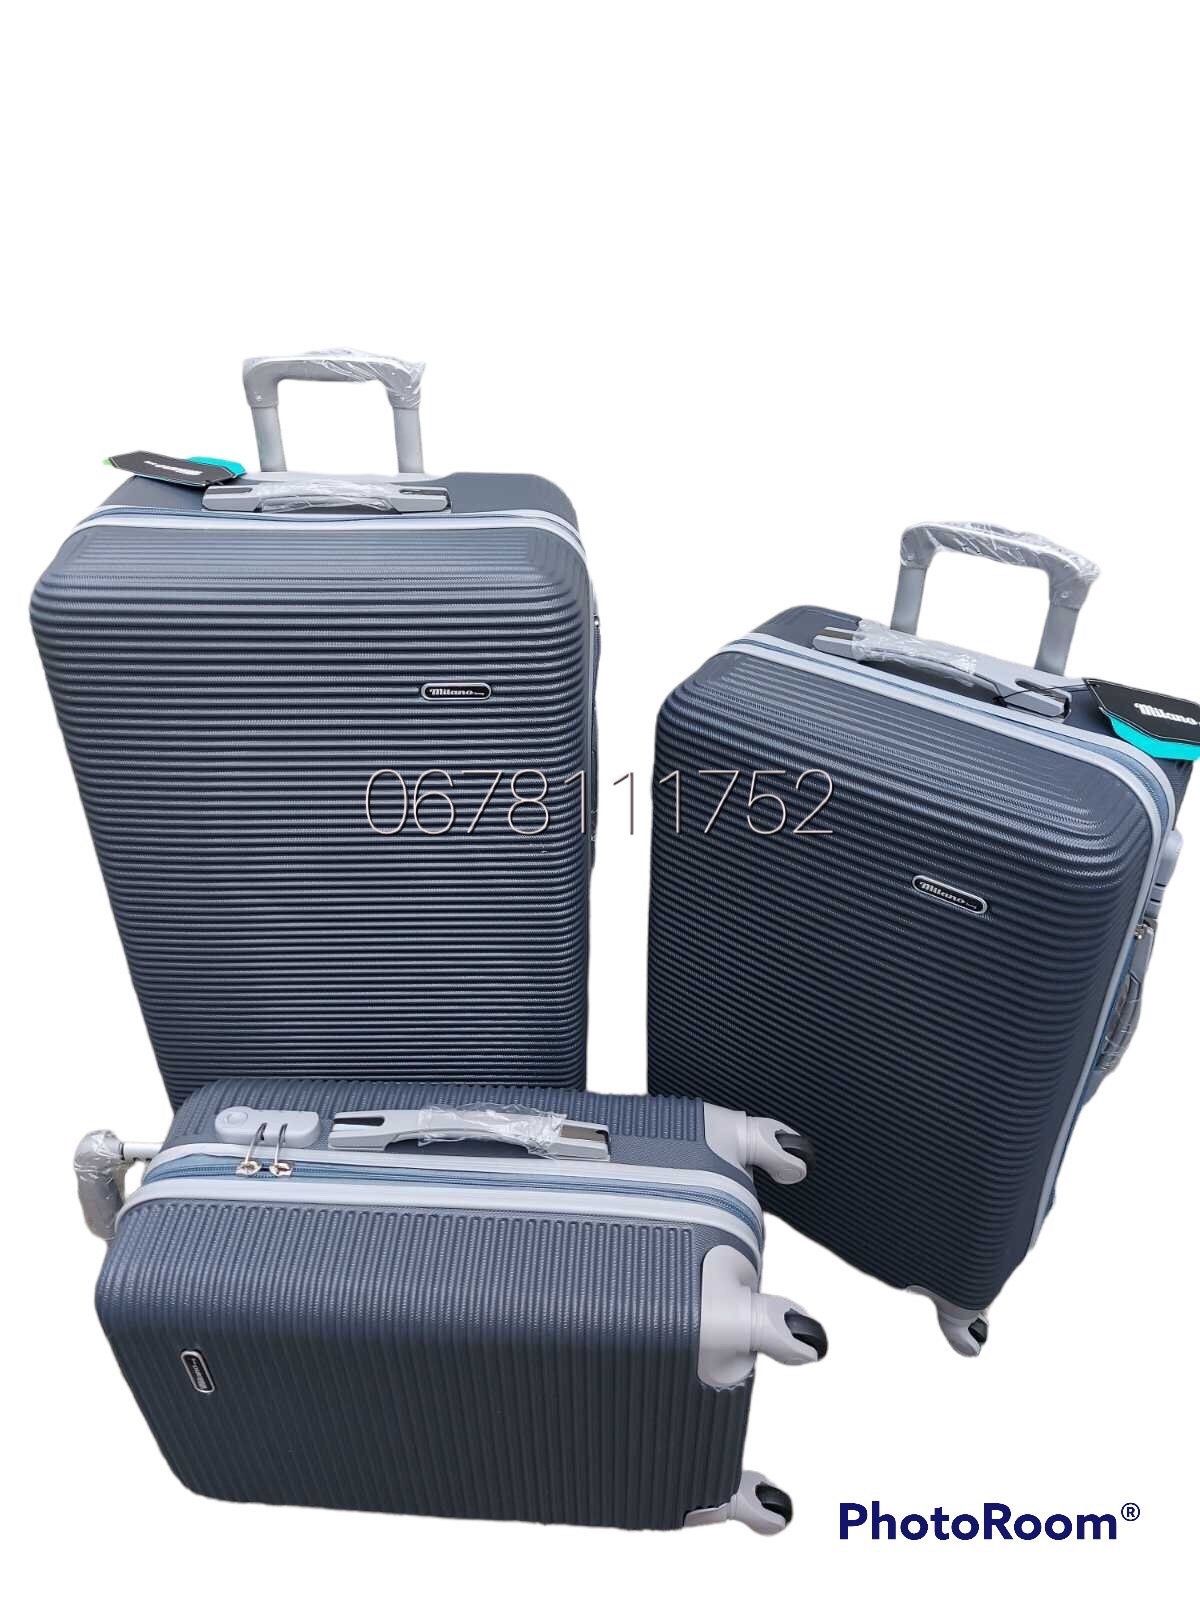 MILANO BAG 004 polycarbonate валізи чемоданы сумки на колесах